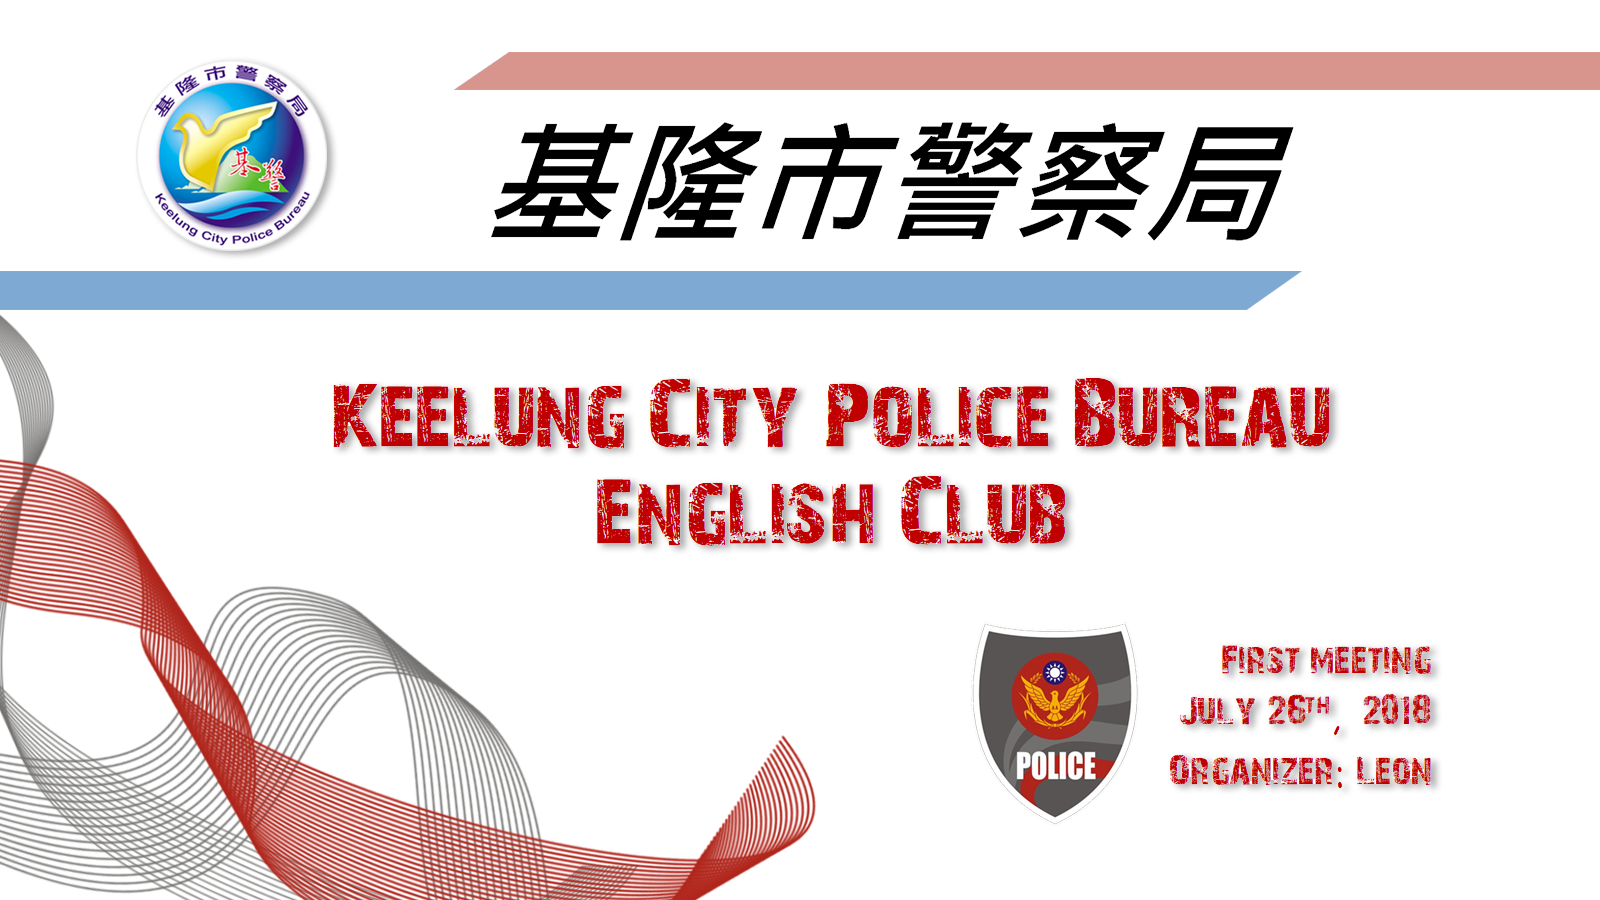 Keelung City Police Bureau Launches “KCPB English Club”